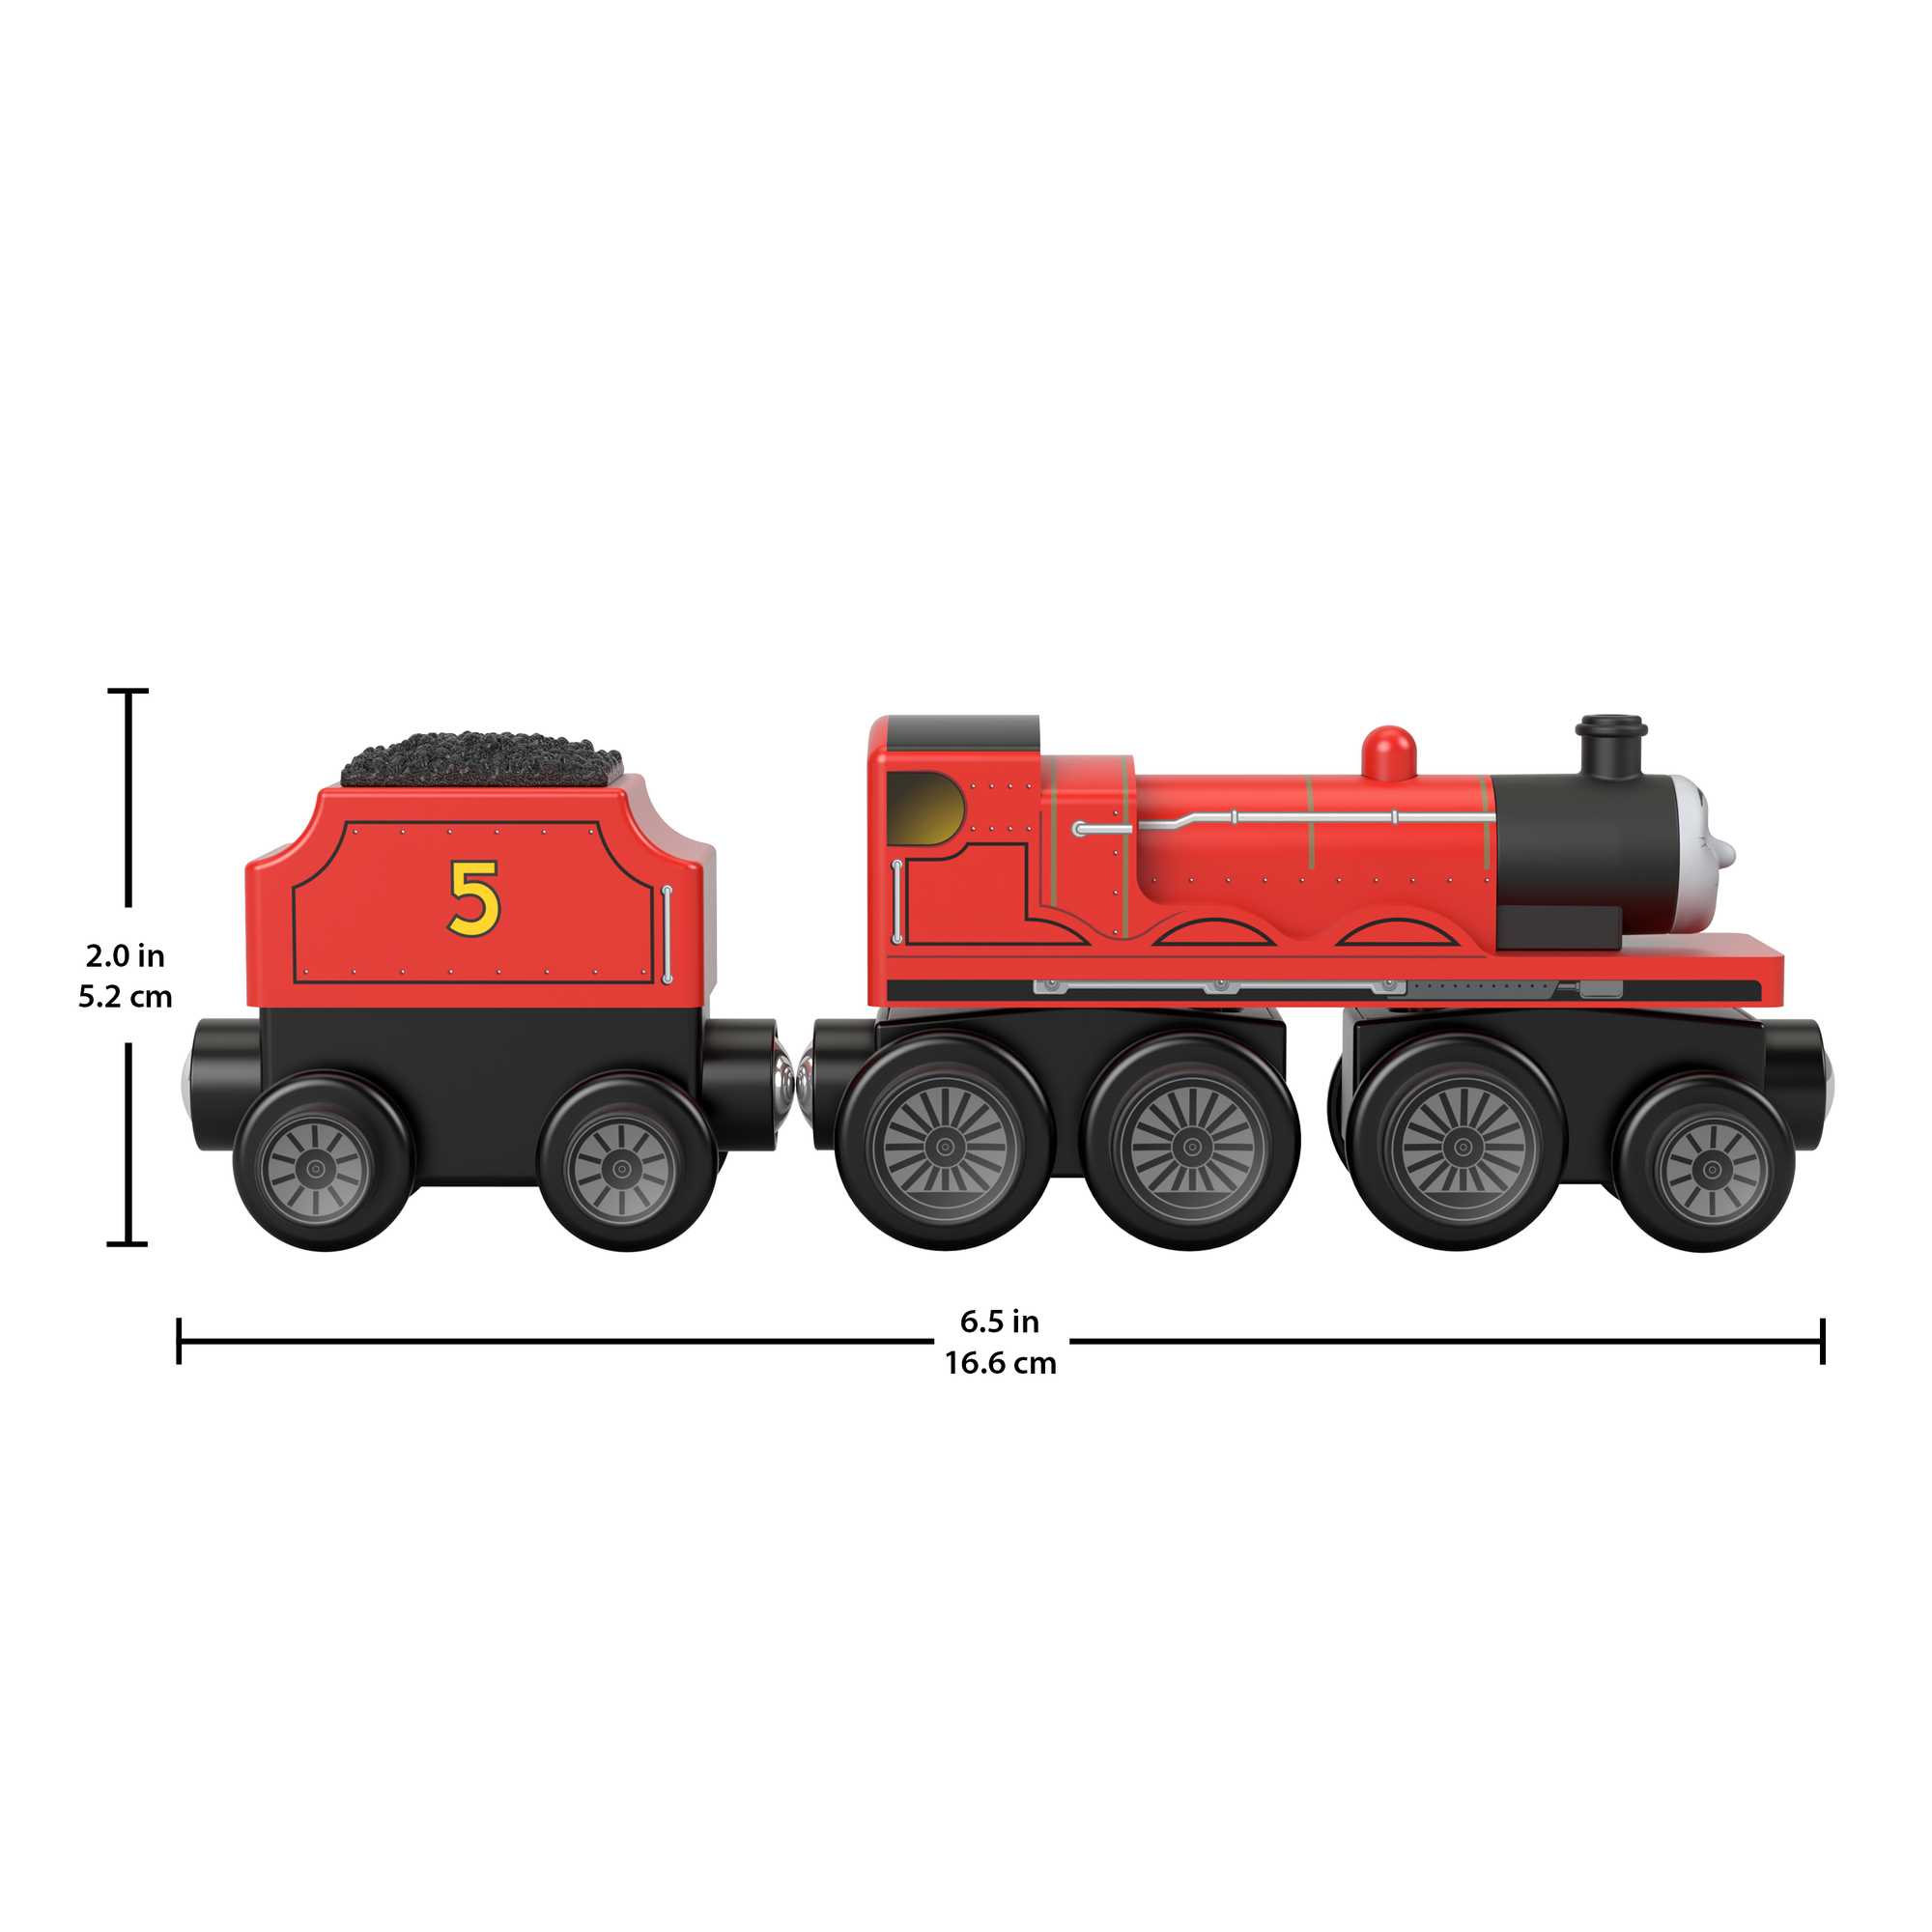 Thomas & Friends Wooden Railway James Toy Train